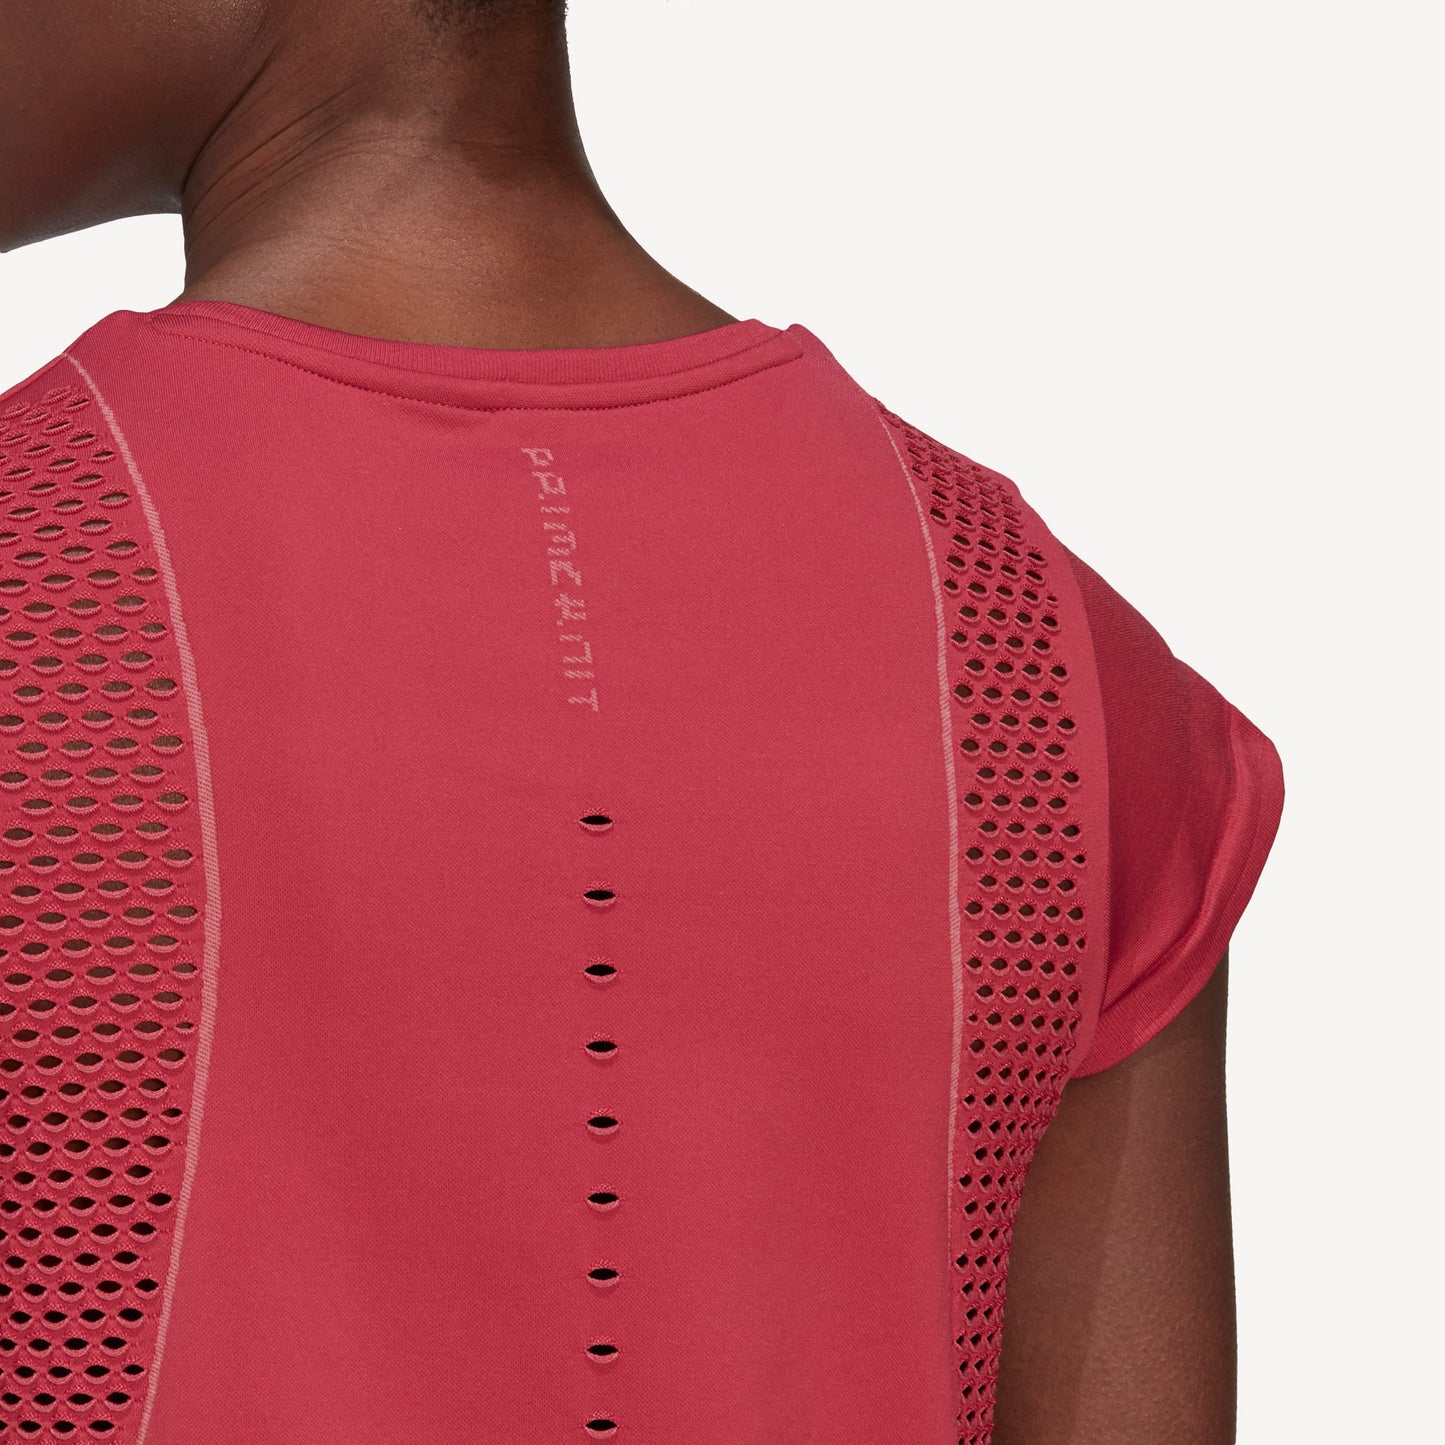 adidas Primeknit Primeblue Women's Tennis Shirt Pink (5)